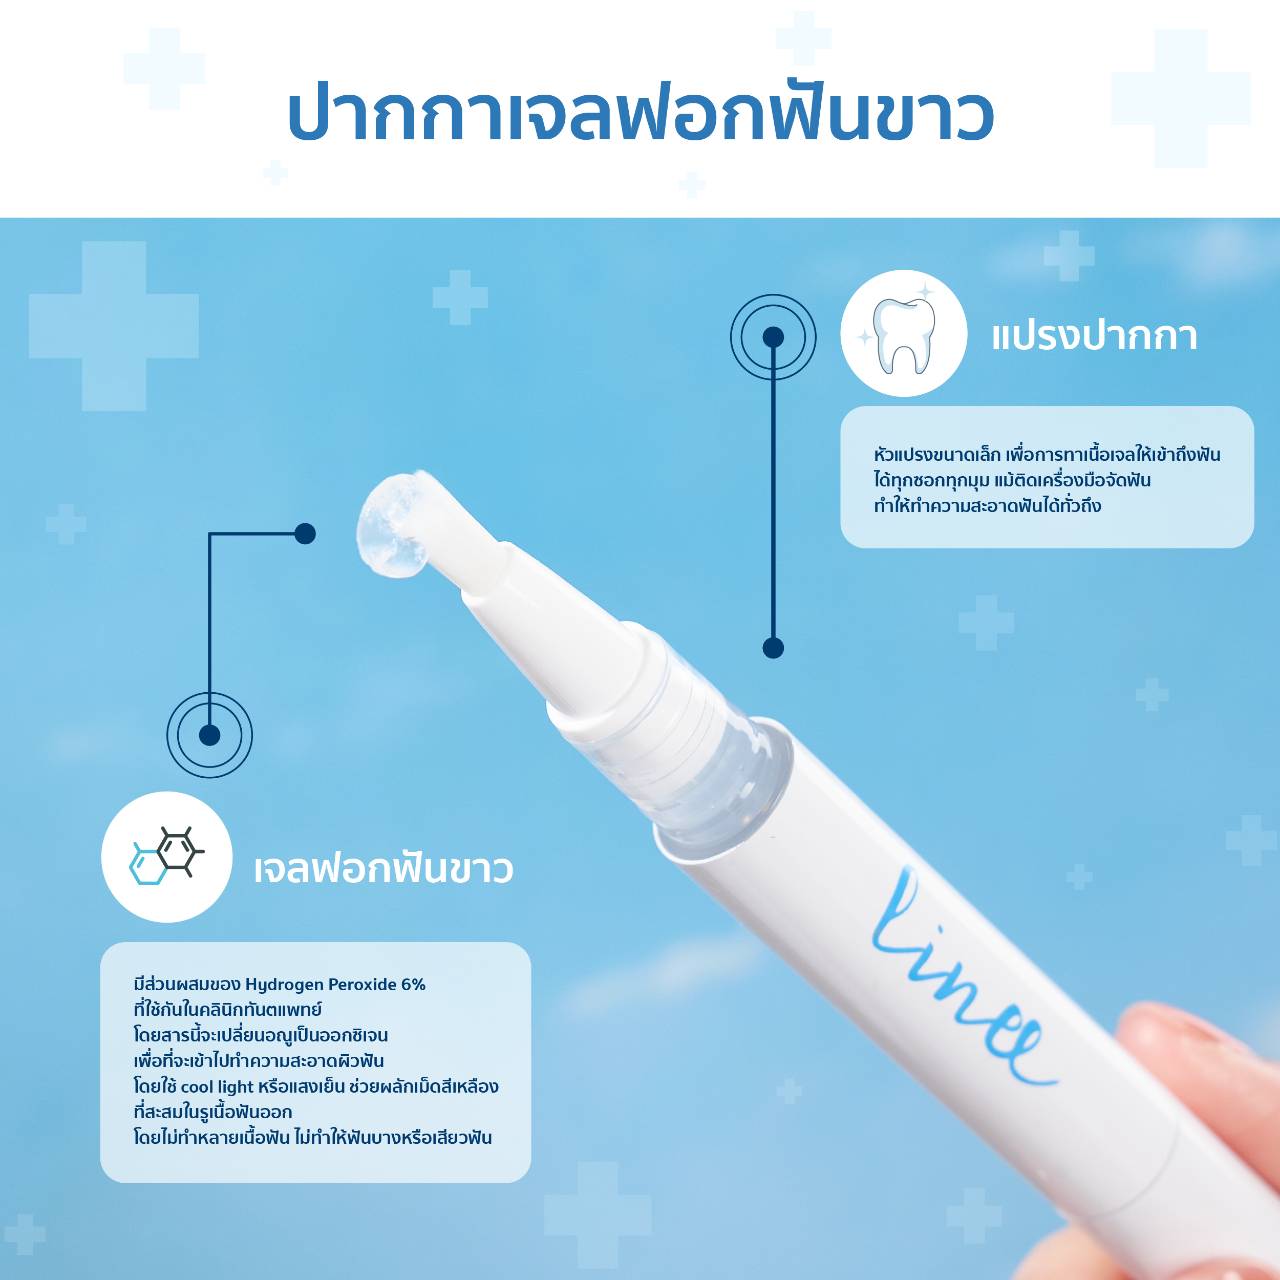 Linee Teeth Whitening  kit  Premium มาพร้อมกับ ลินี น้ำยาบ้วนปากพรีเมี่ยม สูตรฟันขาว ลดหินปูน (กลิ่นชาเขียว มิ้นต์)